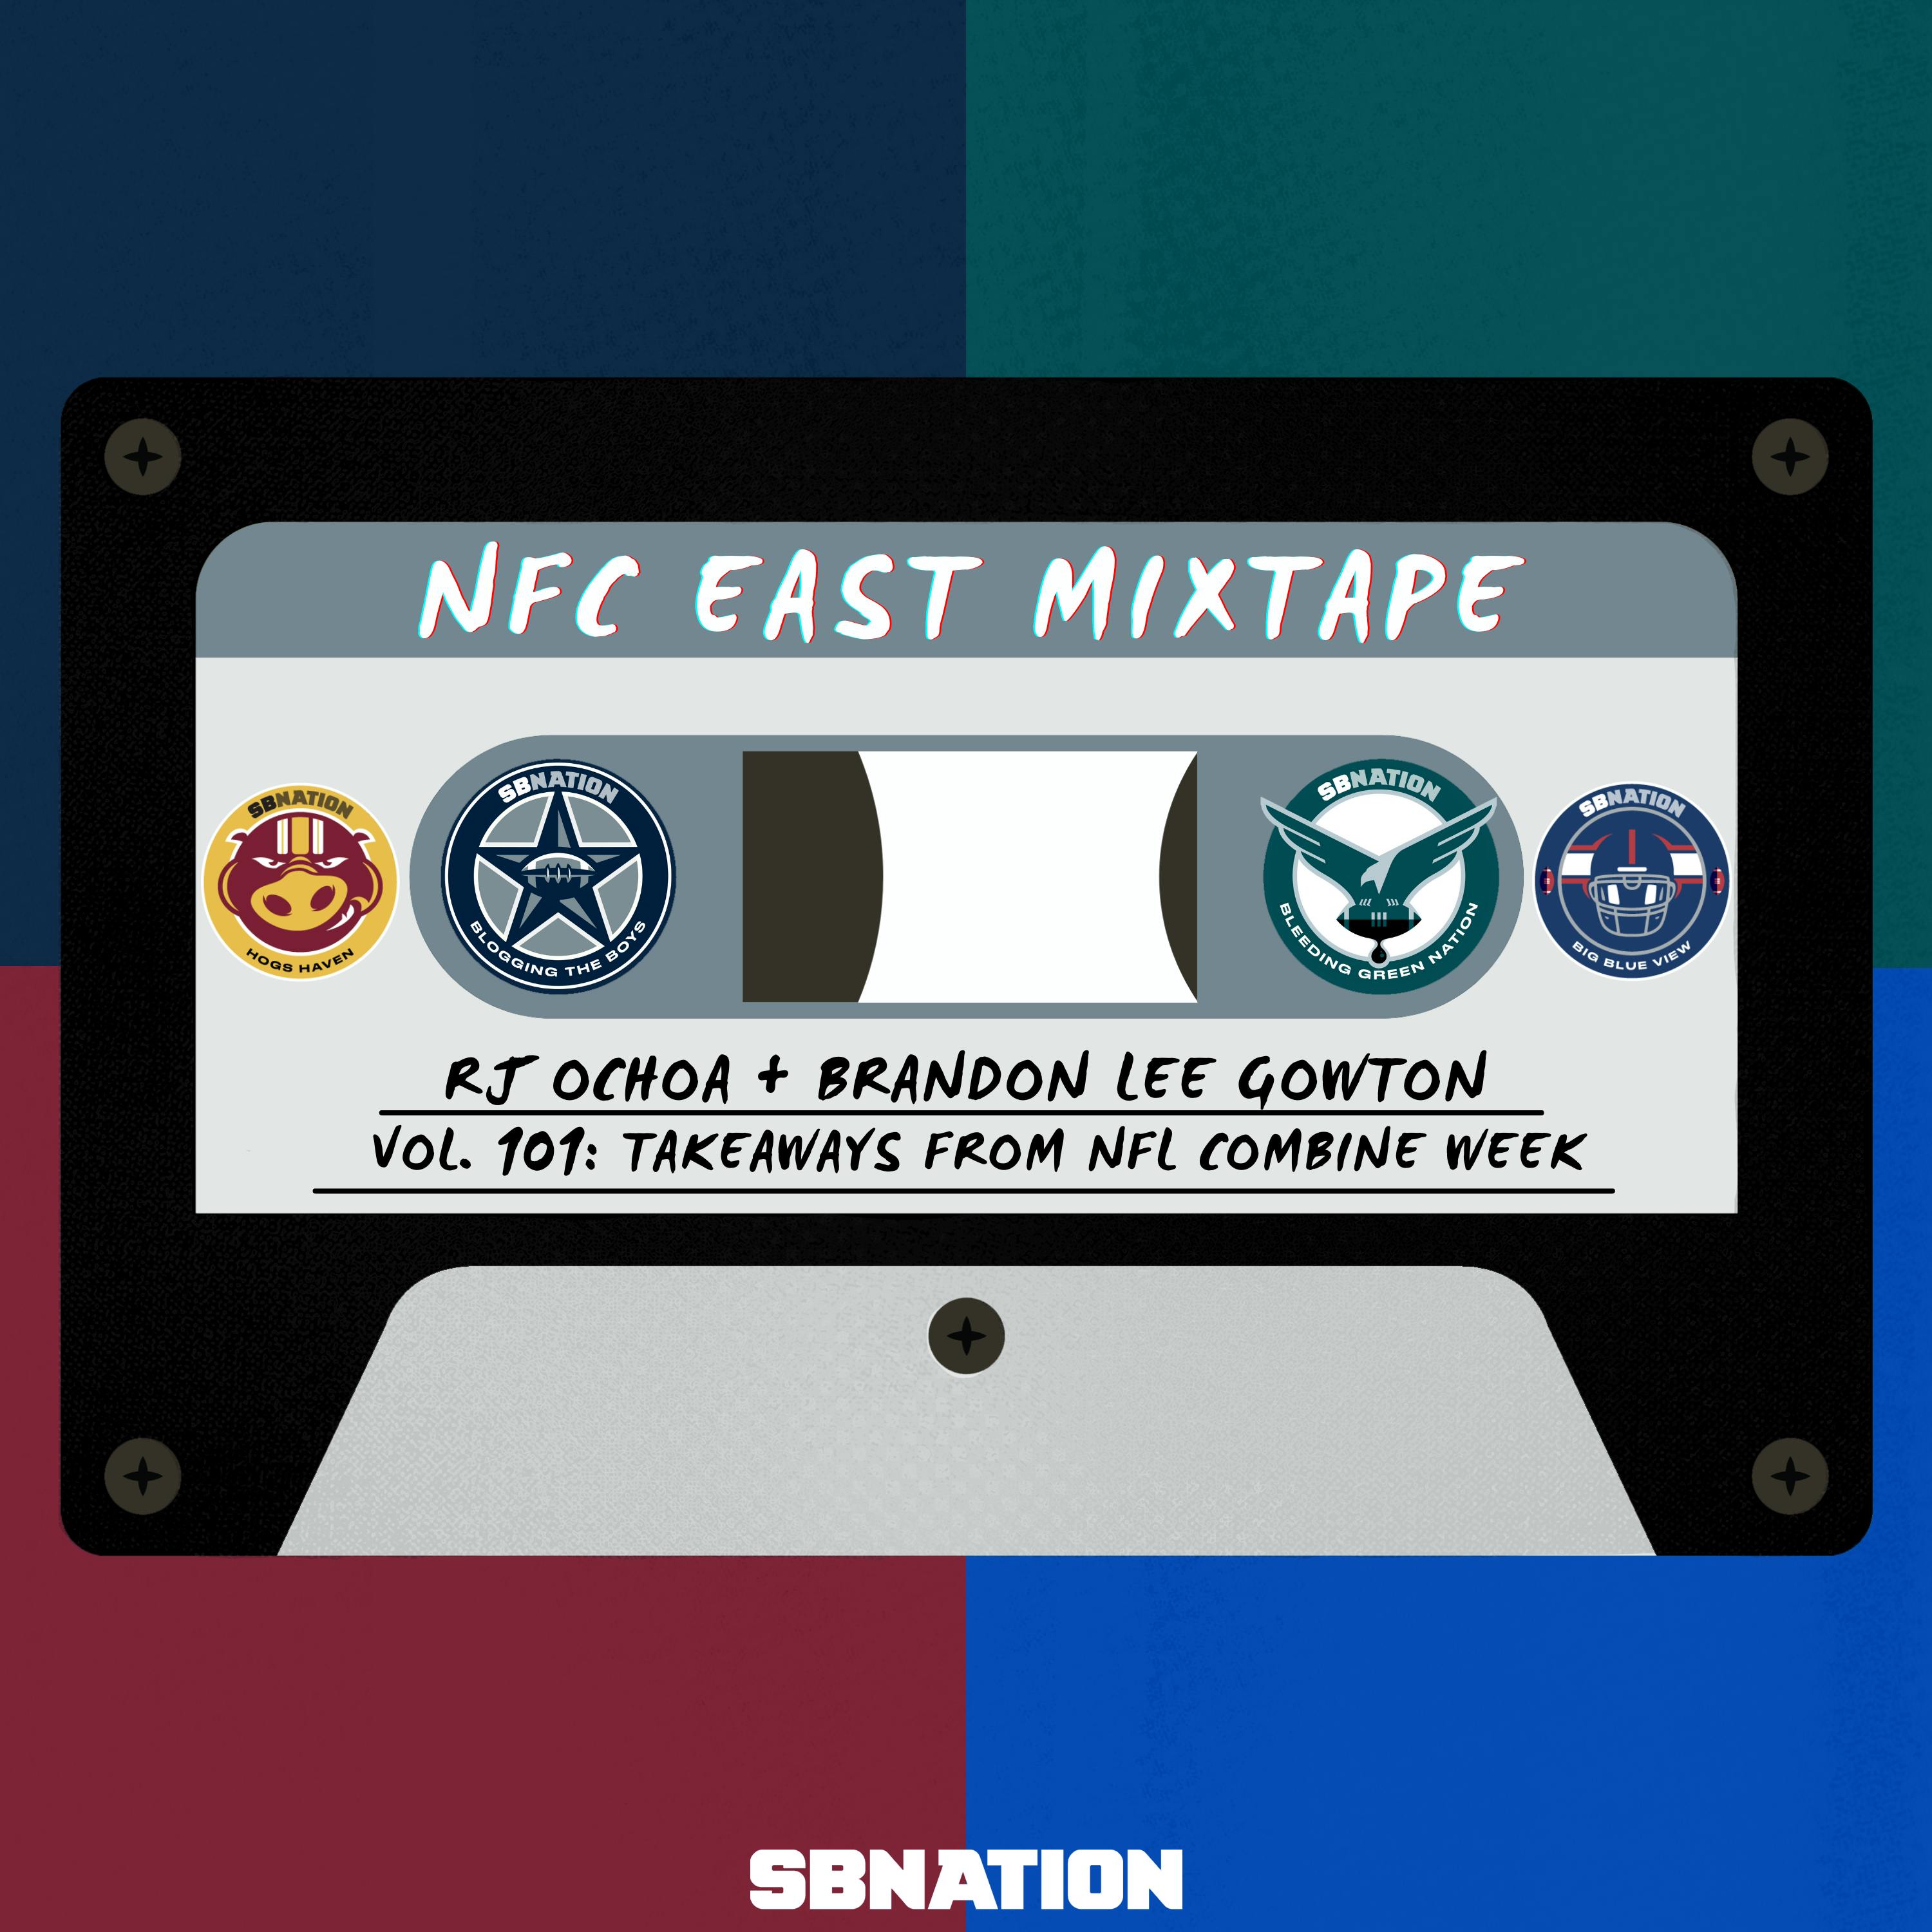 NFC East Mixtape Vol. 101: Takeaways from NFL Combine week